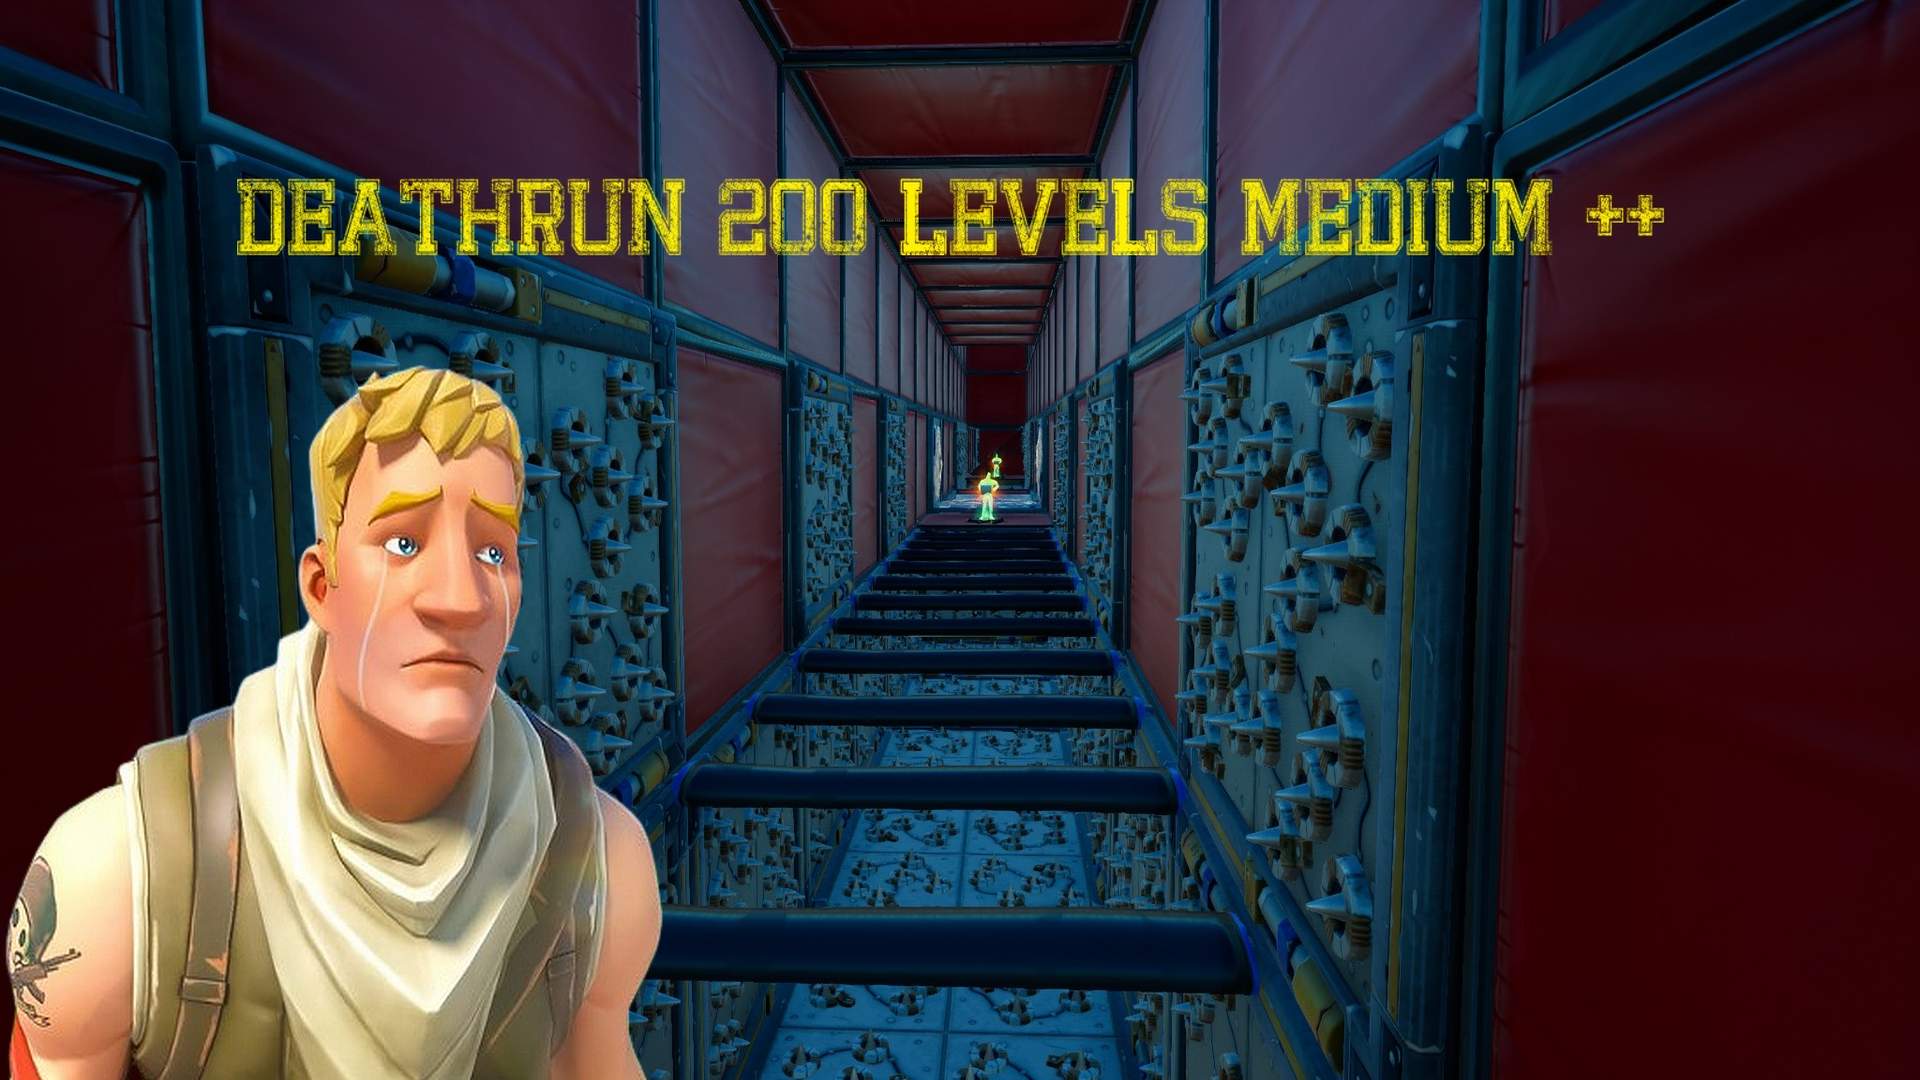 Deathrun 200 Levels Medium ++